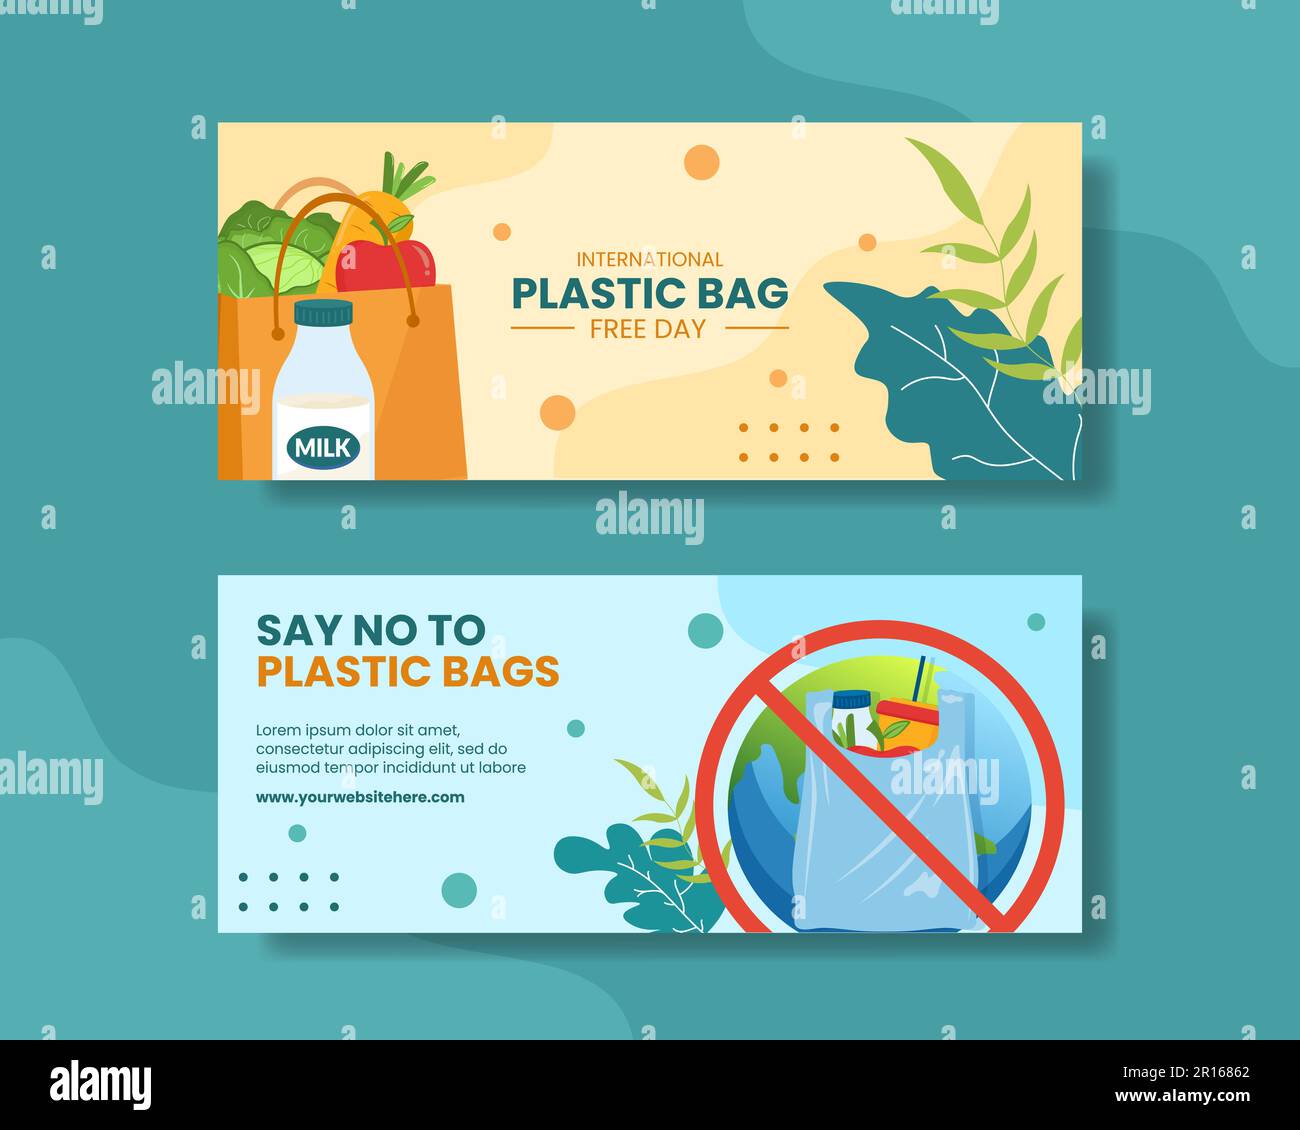 International Plastic Bag Free Day Horizontal Banner Cartoon Hand Drawn ...